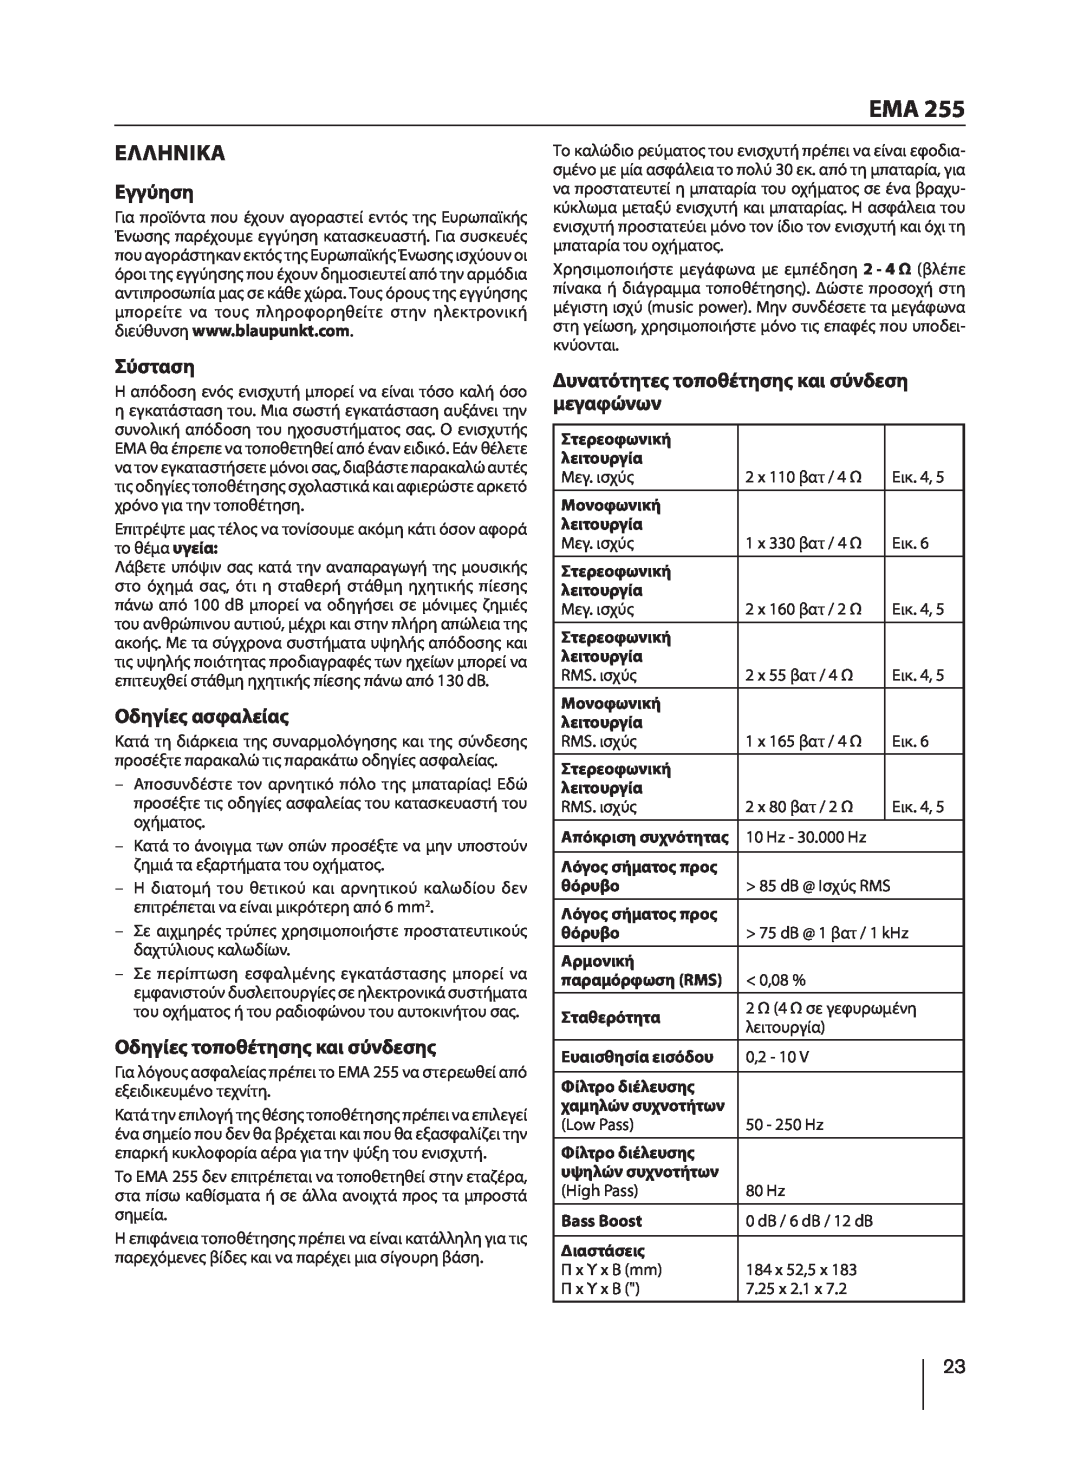 Blaupunkt EMA 255 manual Ελληνικα, Εγγύηση, Σύσταση, Οδηγίες ασφαλείας, Οδηγίες τοποθέτησης και σύνδεσης 